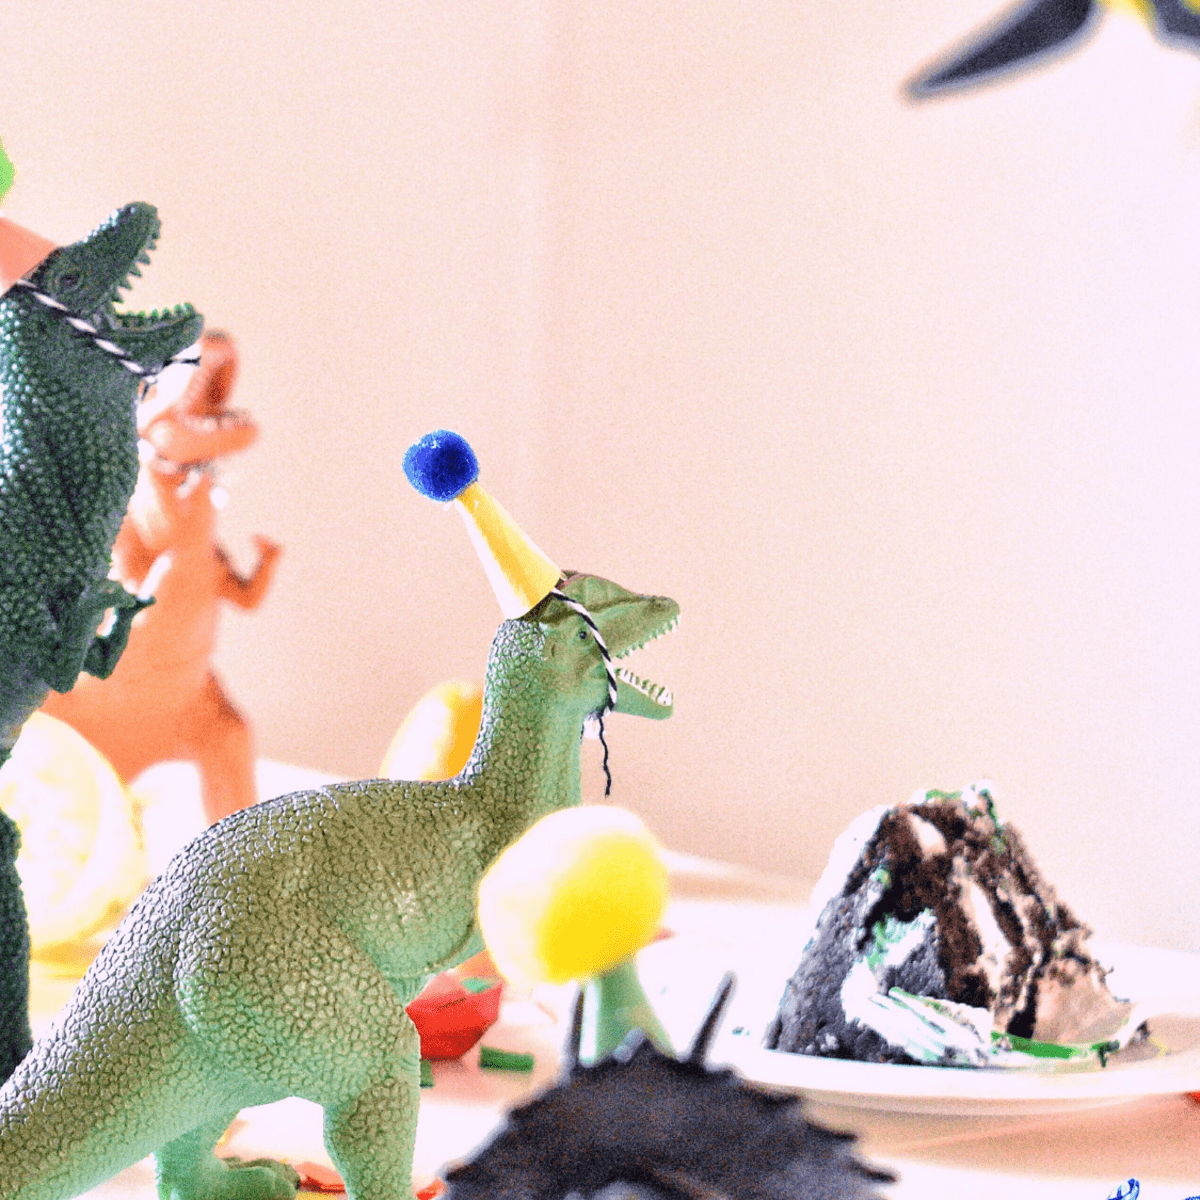 10 Fun Dinosaur Birthday Party Ideas and Activities - WeHaveKids